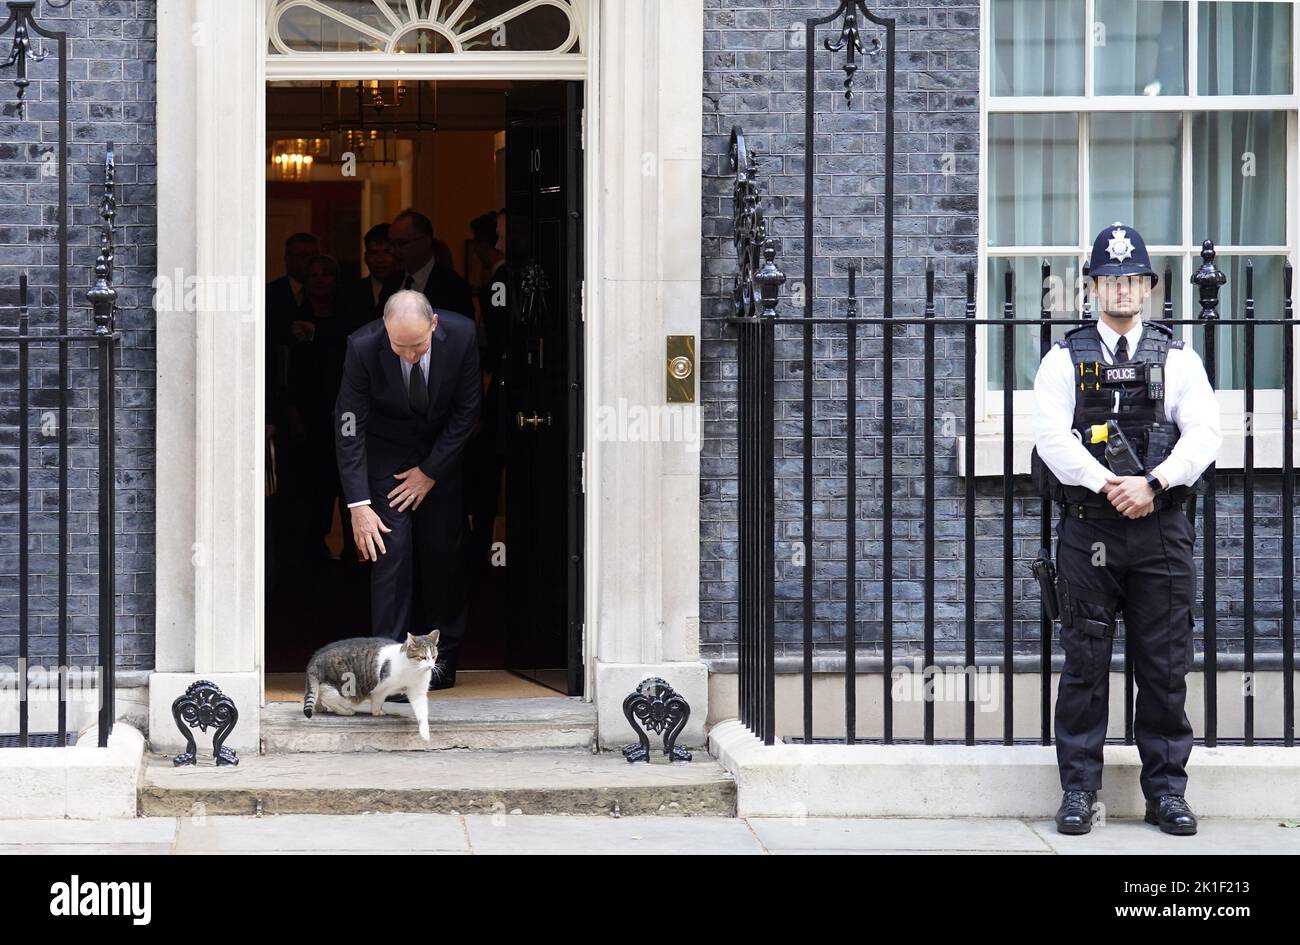 El Taoiseach Irlandés Micheal Martin trata de acariciar a Larry el gato al salir de 10 Downing Street en Londres, después de una reunión bilateral con el Primer Ministro Liz Truss en . Fecha de la foto: Domingo 18 de septiembre de 2022. Foto de stock